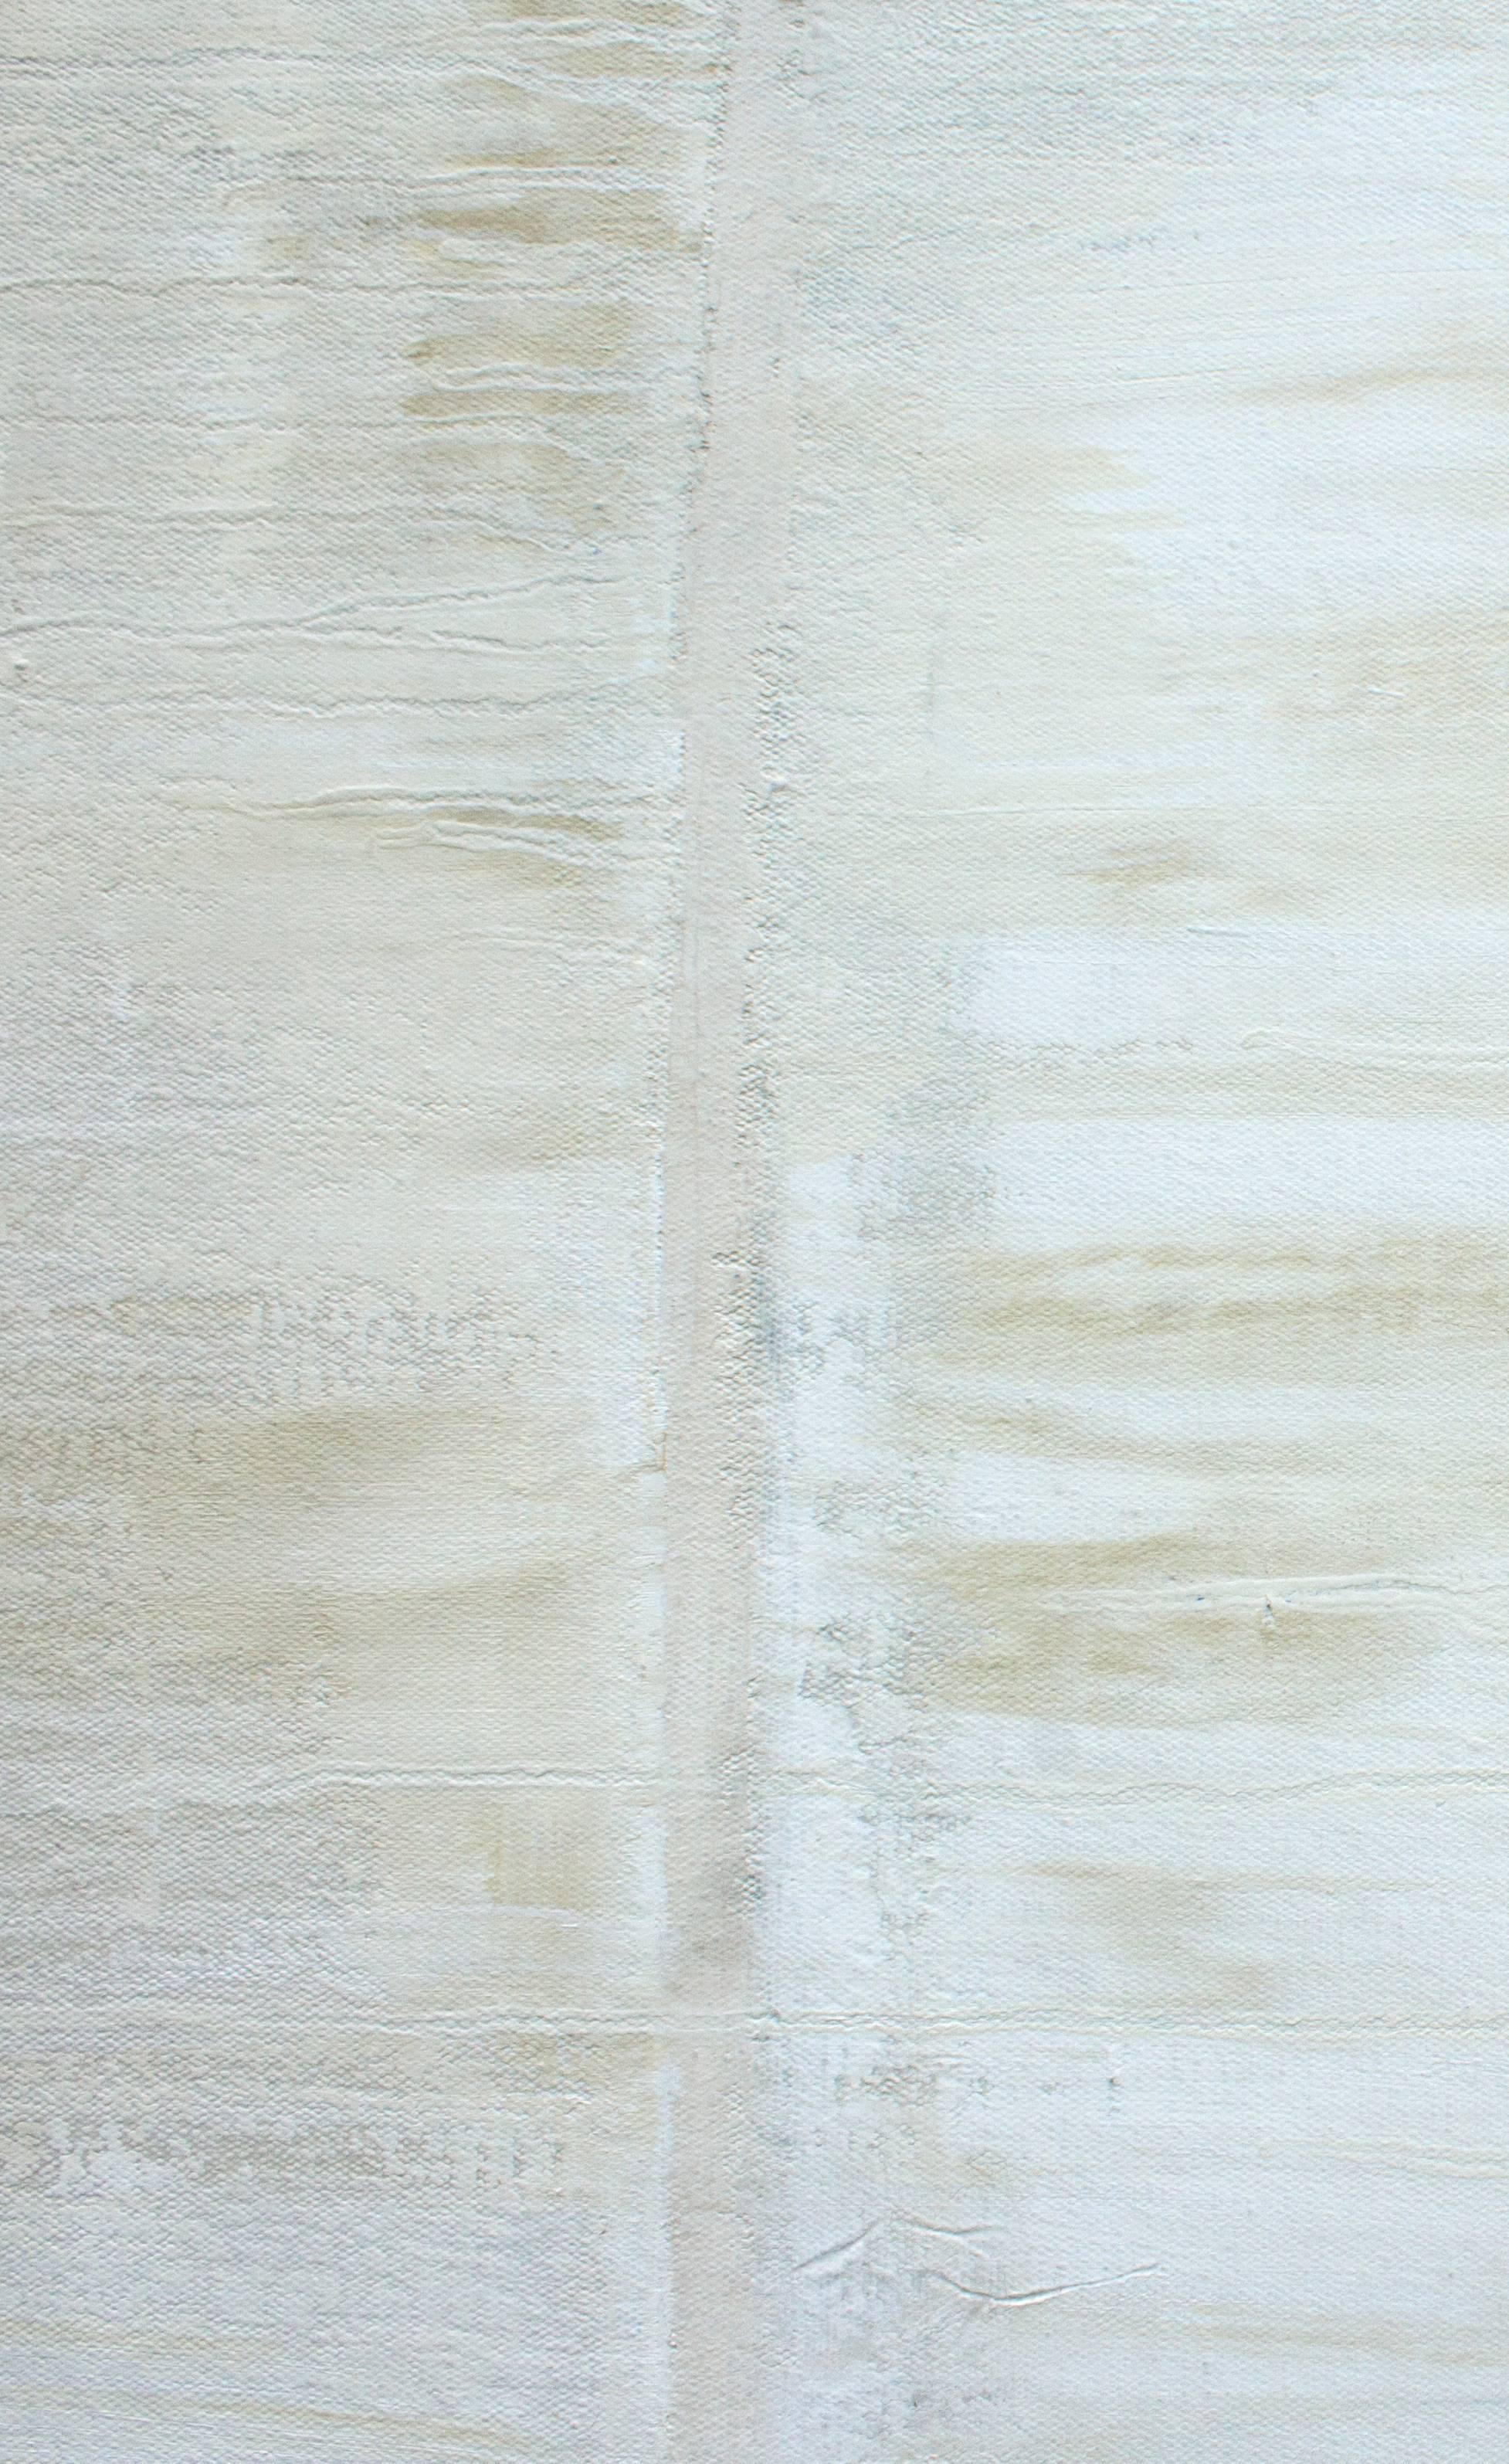 Still white #2 - Abstract Art by Perla Krauze